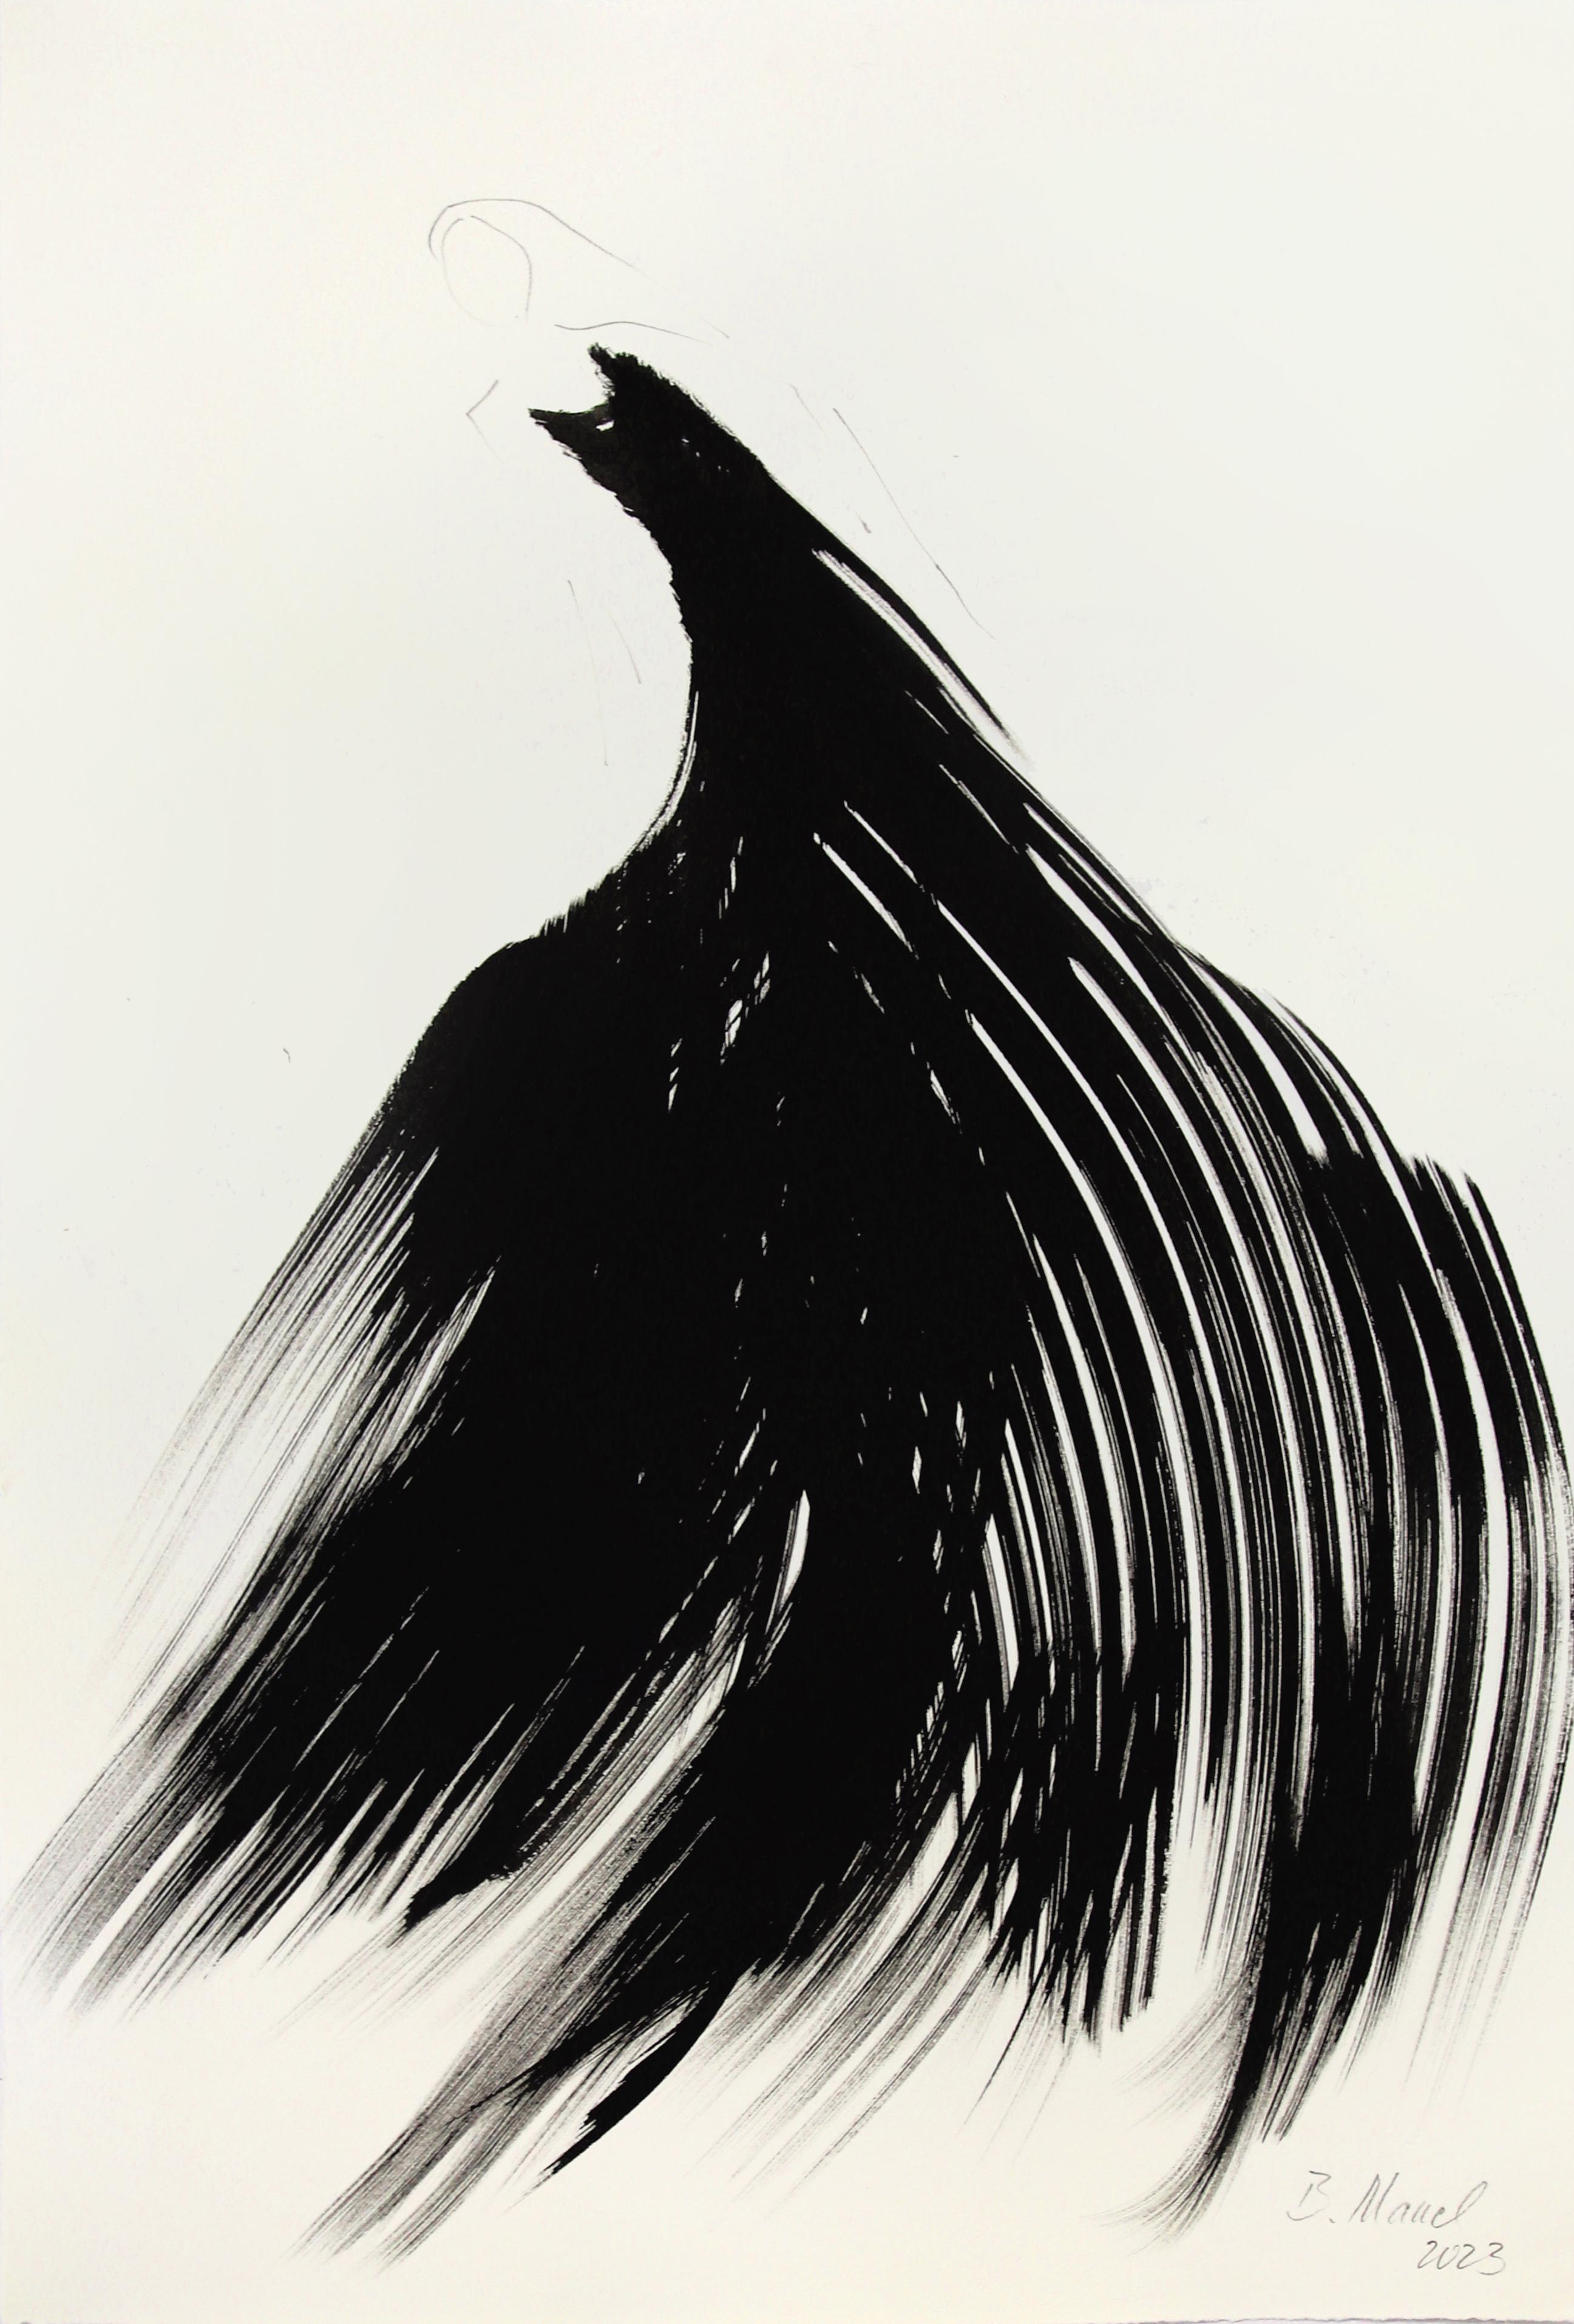 Bettina Mauel Abstract Painting - Black Beauty 4 - Monochrome Minimalist Figurative Ink Painting